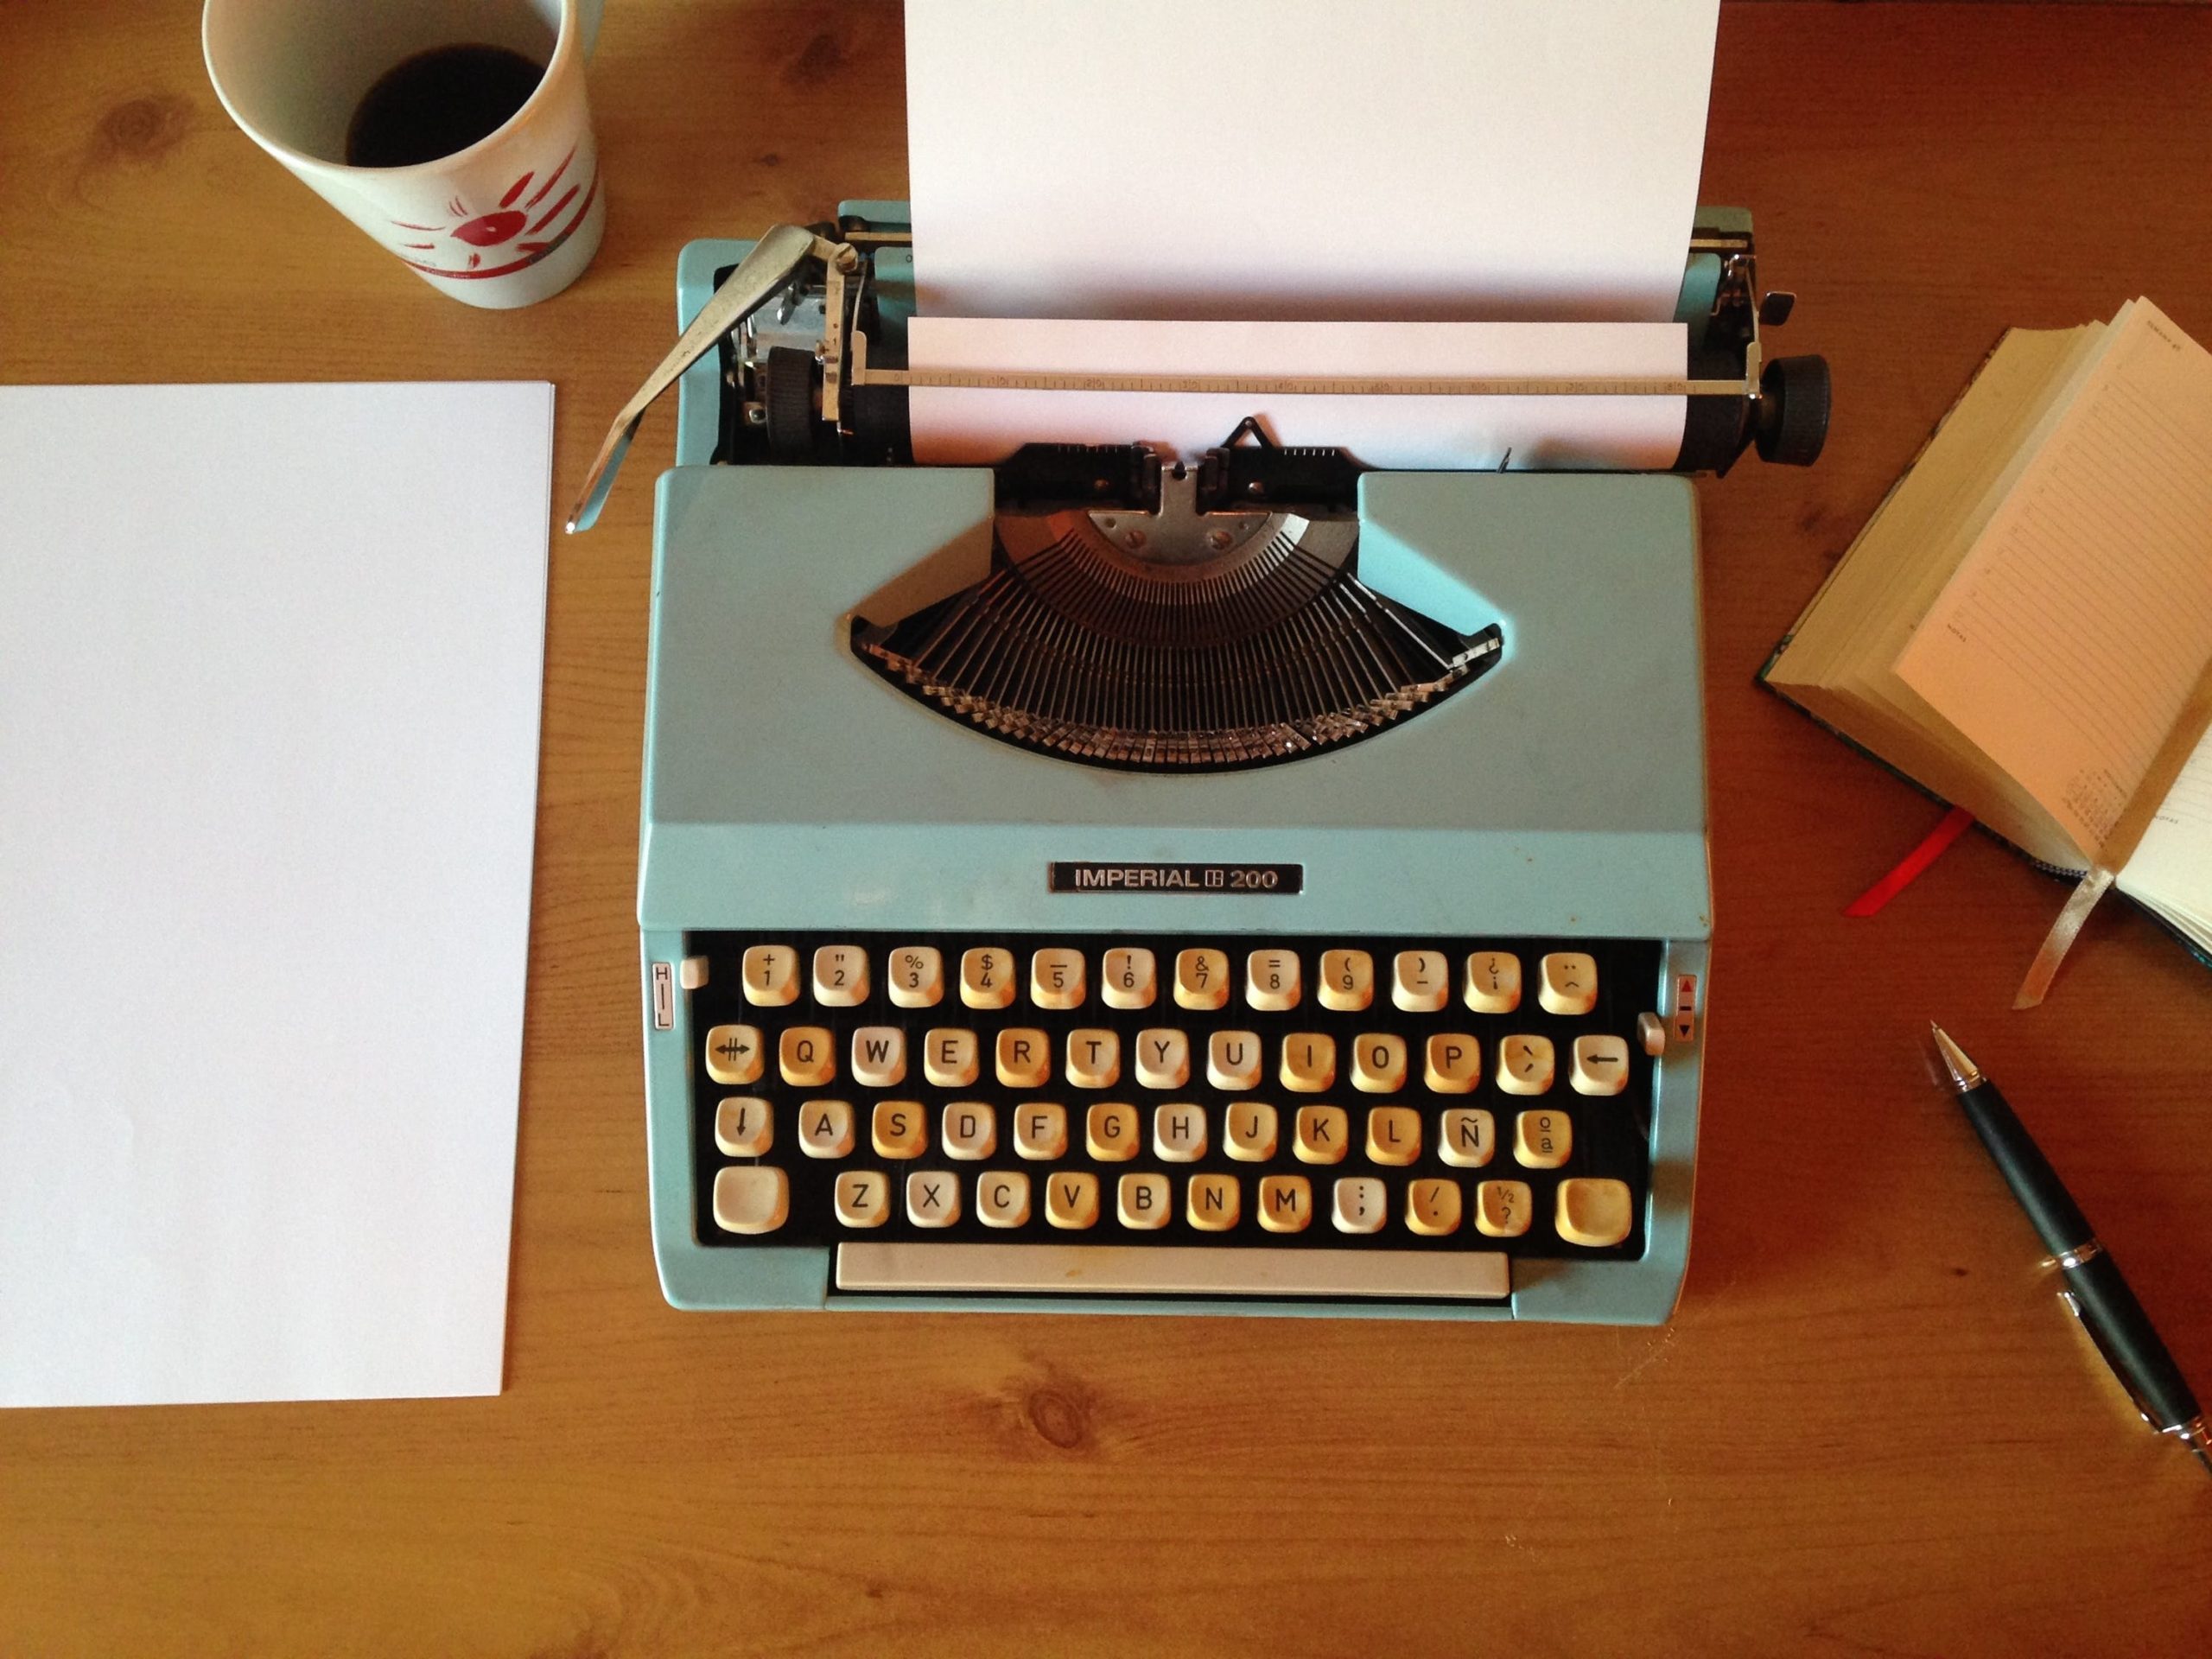 A photo of a typewriter